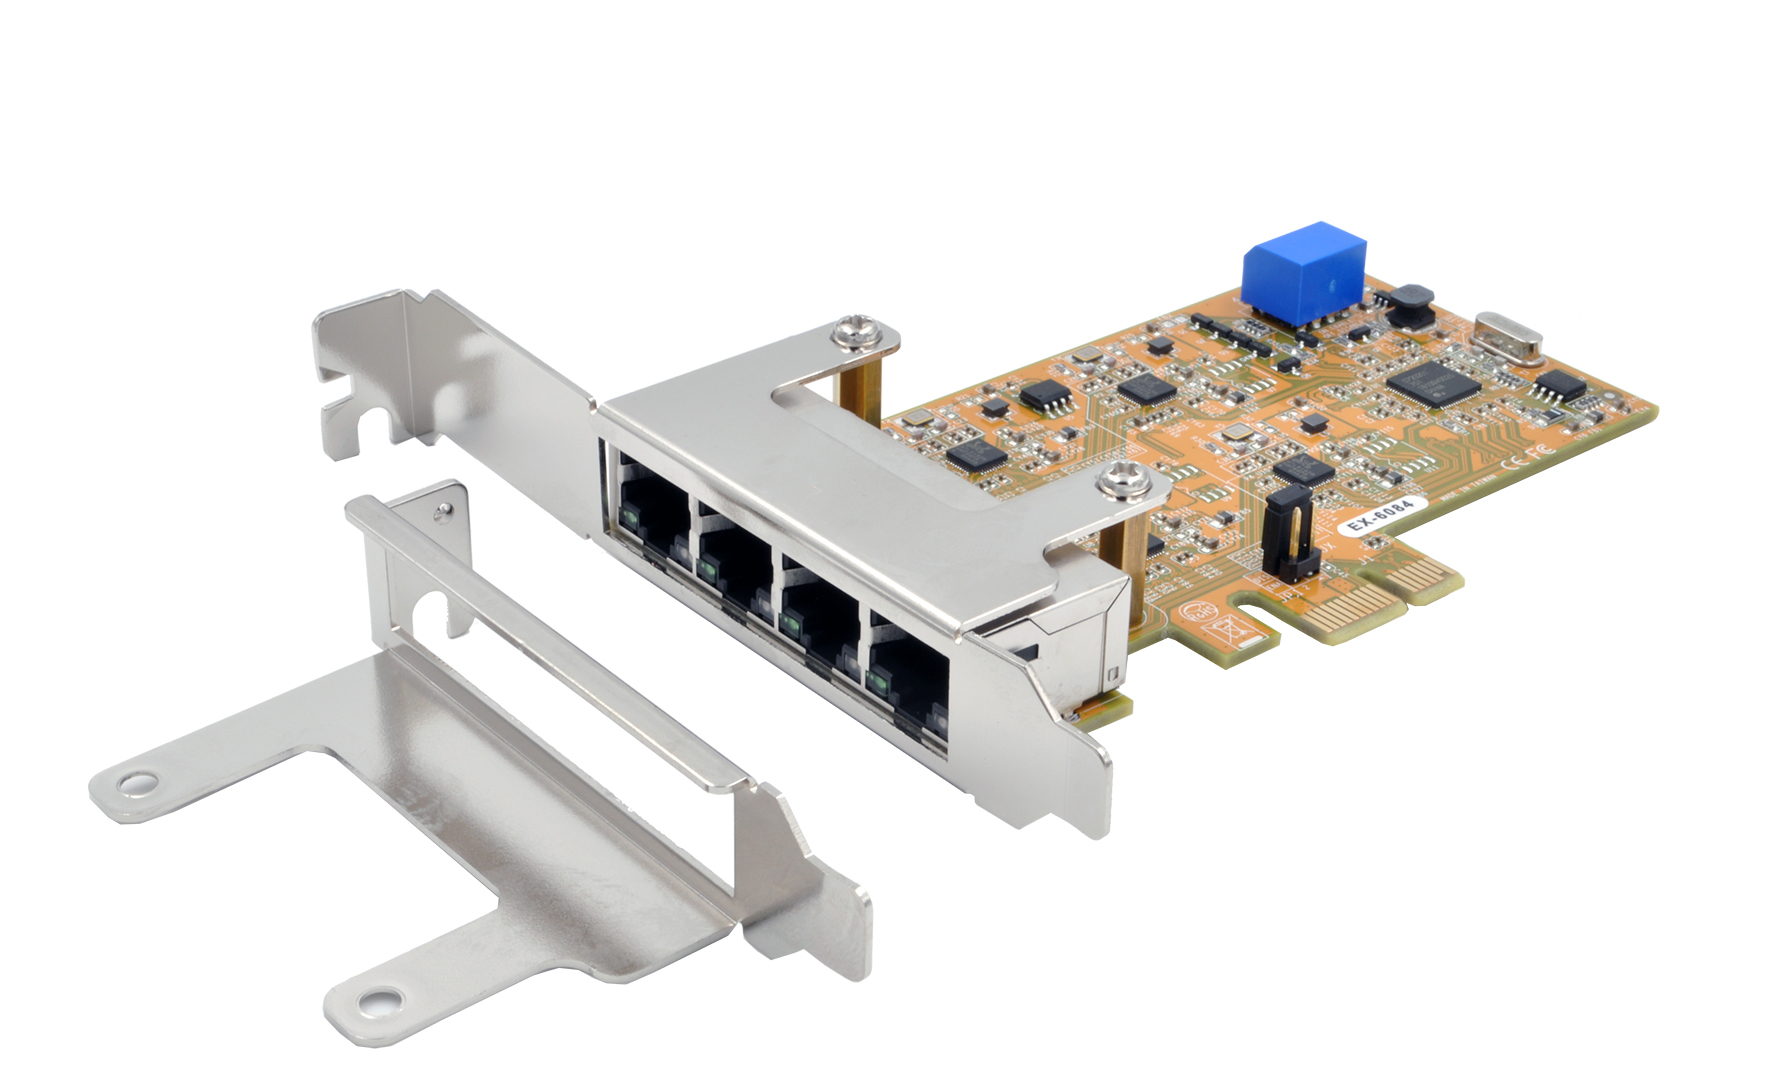 Exsys EX-6084 - Netzwerkadapter - PCIe - Gigabit